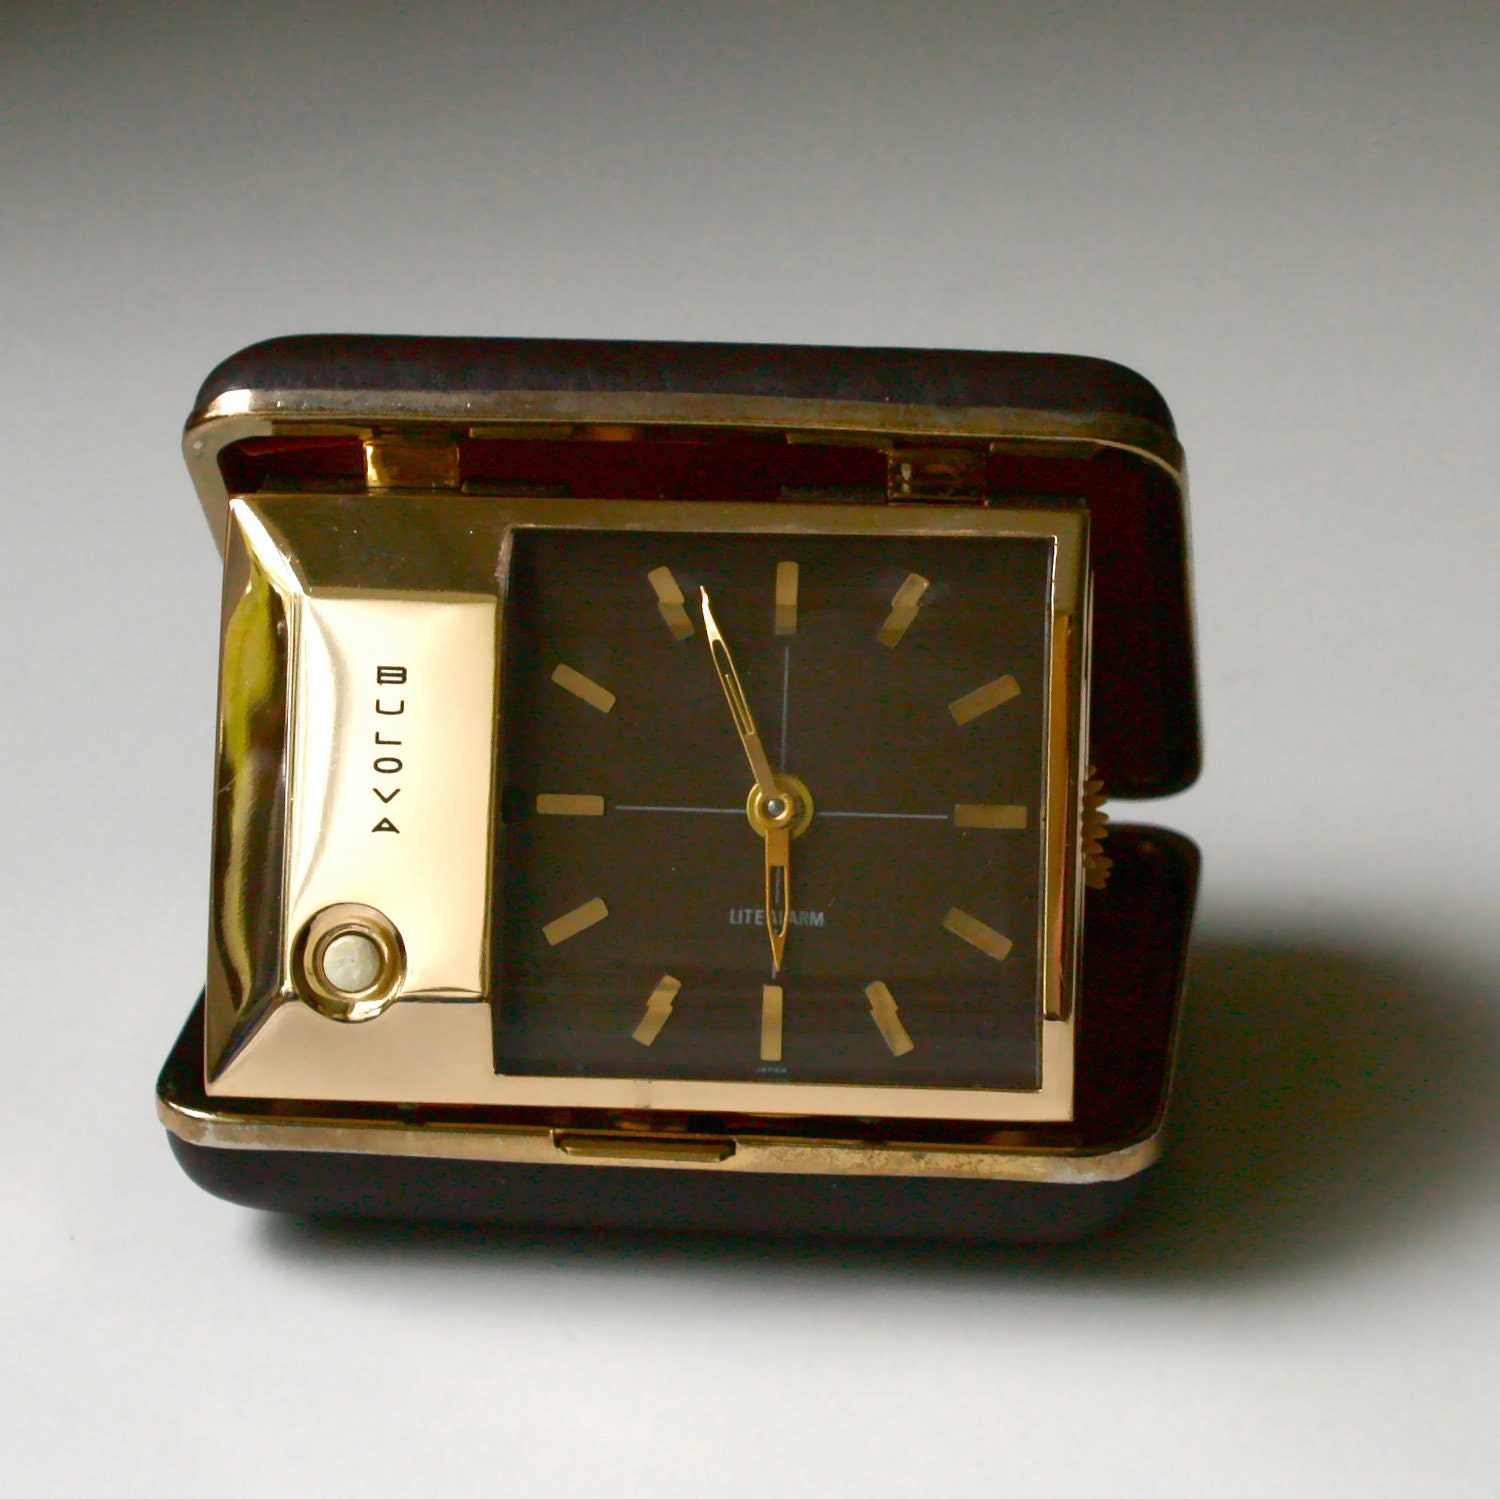 Vintage 1970s Bulova Travel Alarm Clock